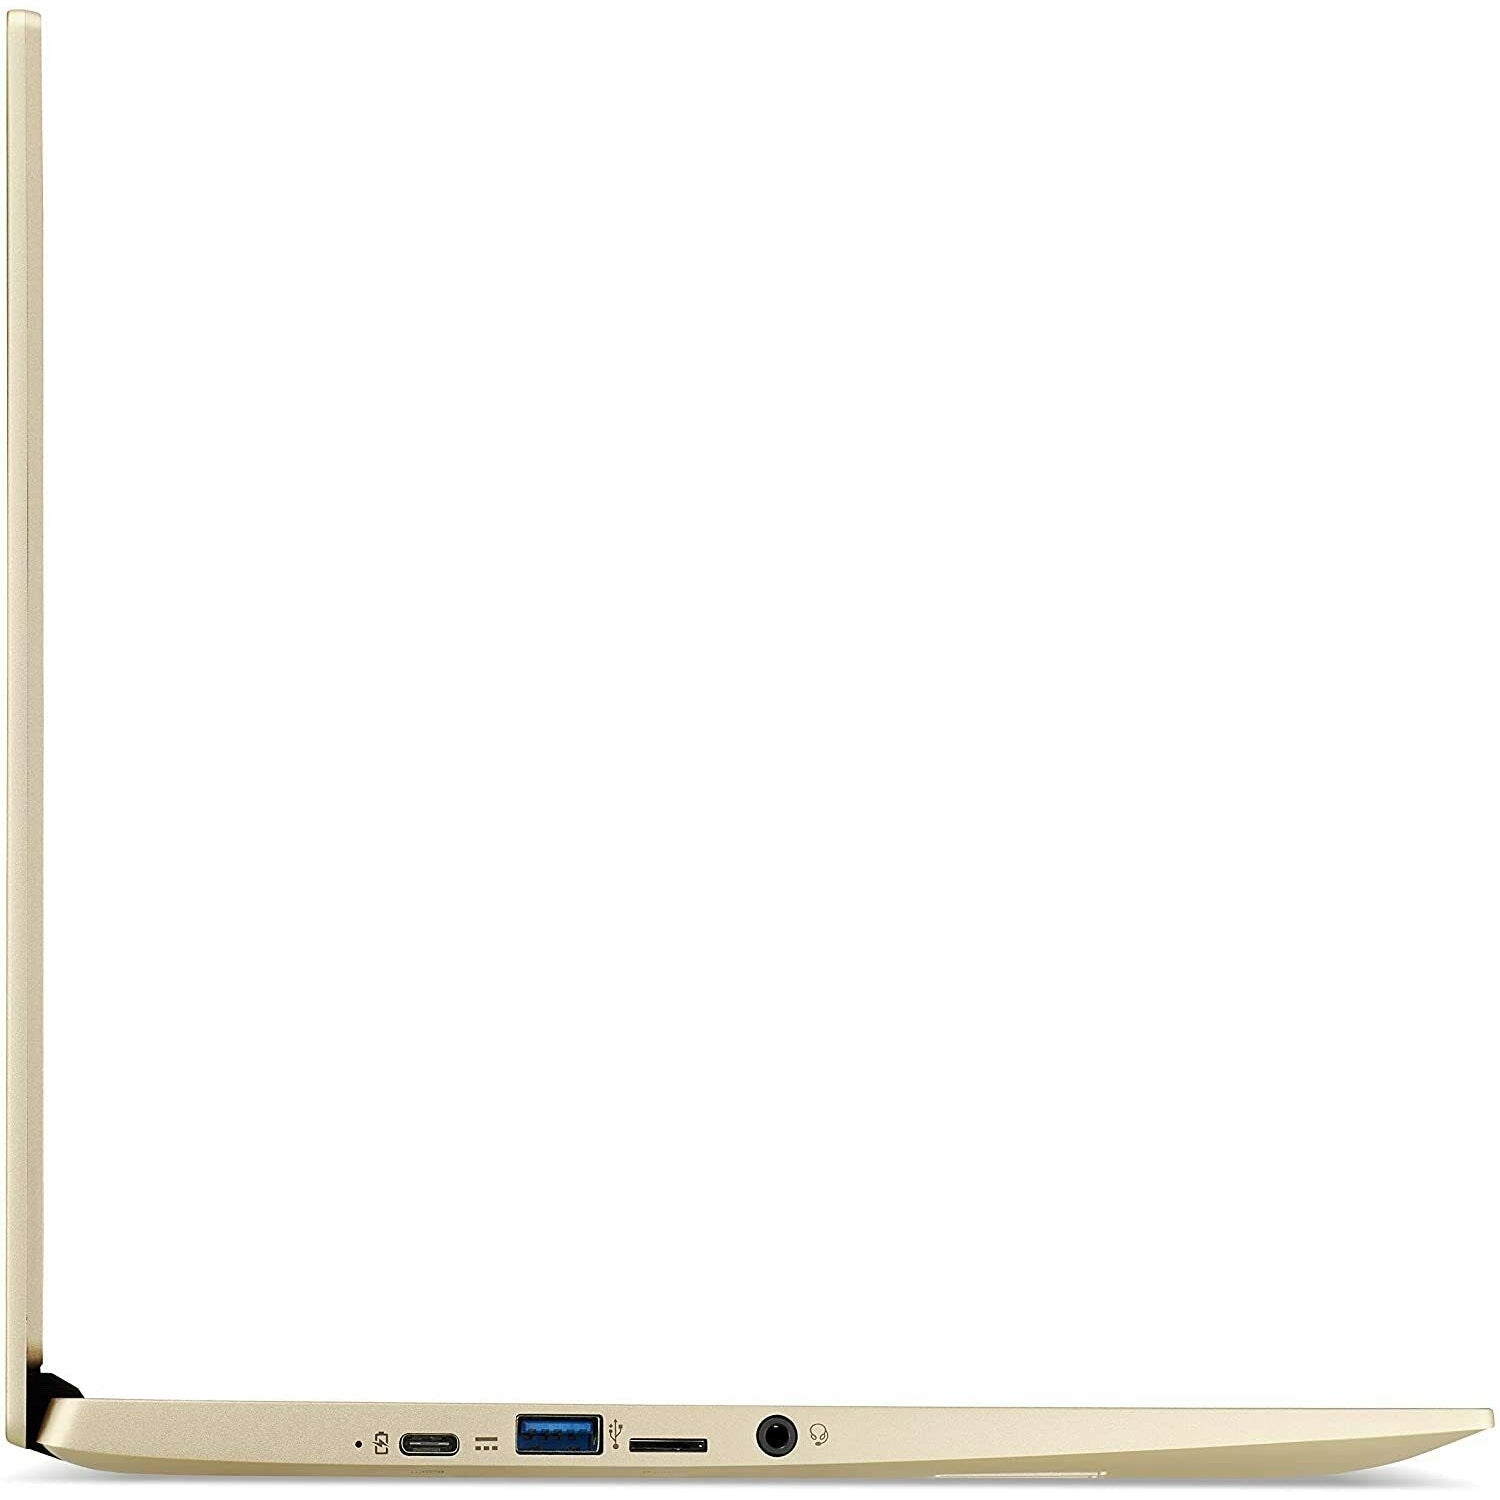 Acer Chromebook 14 CB514-1HT-C625 Laptop, Intel Celeron 4GB 64GB Gold